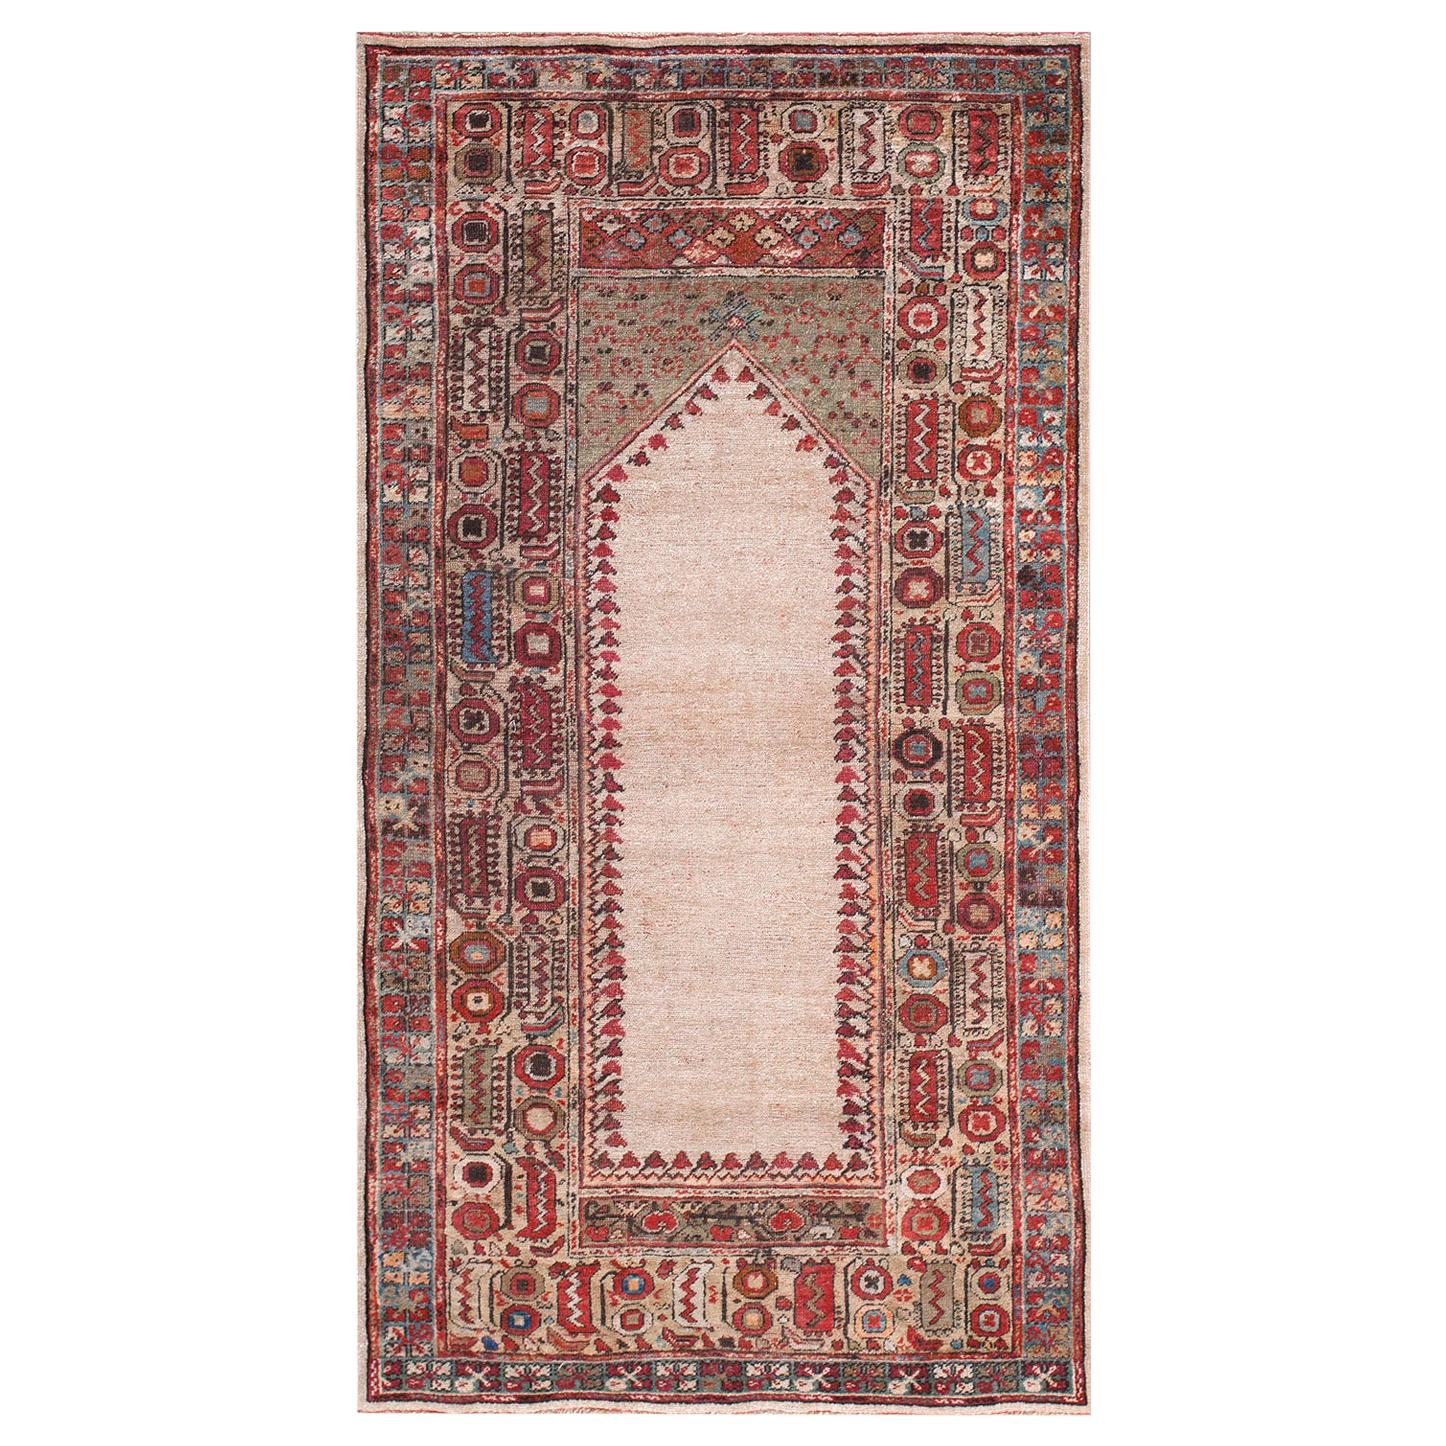 19th Century Turkish Oushak Ghiordes Prayer Carpet ( 3'6" x 6'4" - 107 x 193 ) For Sale